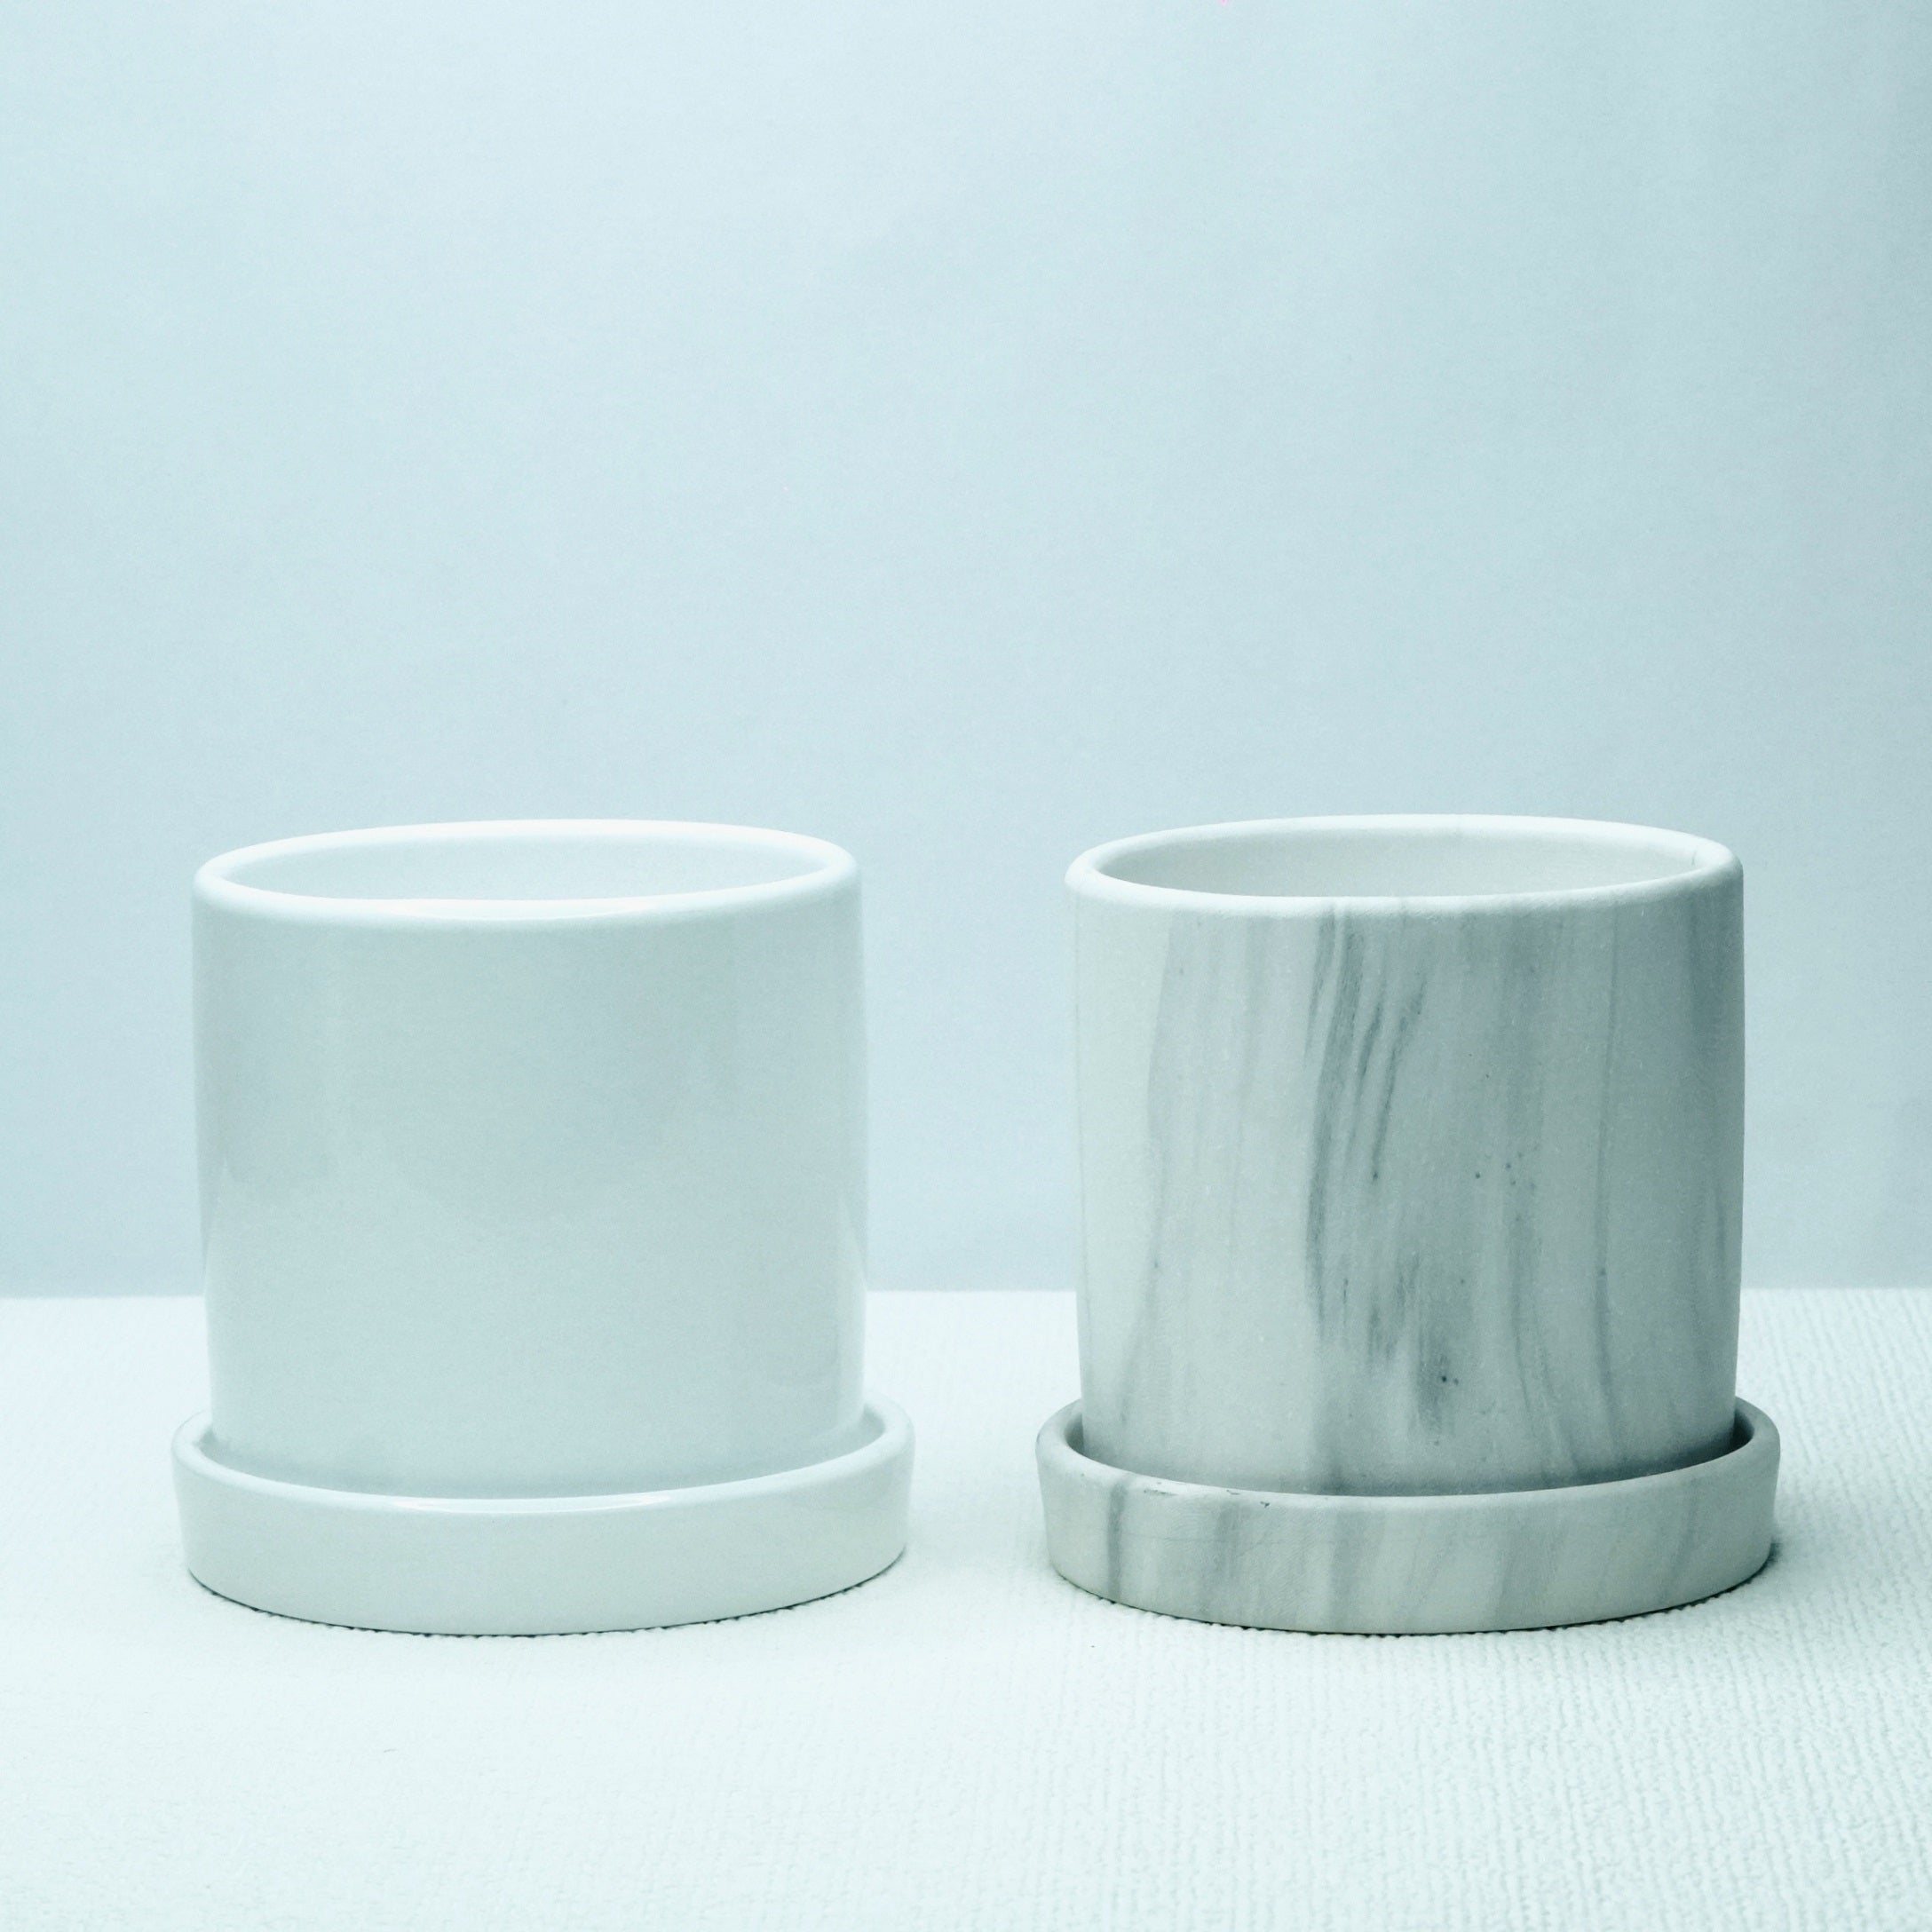 Set of 2 Glossy White & Marble Finishing Ceramic Pots 4 inch